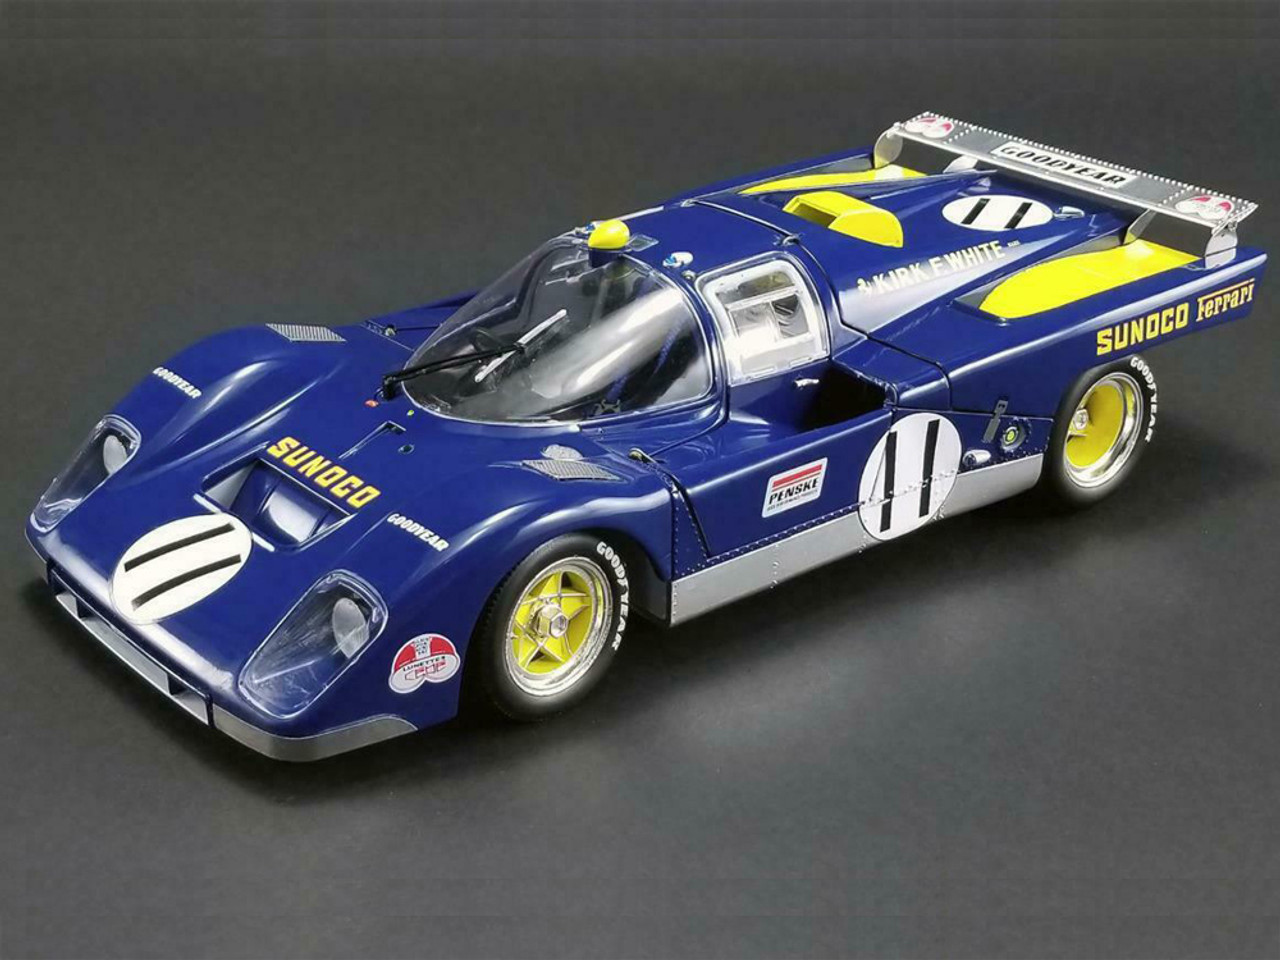 1/18 ACME Masterpiece Collection - Sunoco 1971 24 Hours of Le Mans Ferrari 512M #11 (Blue) Diecast Car Model